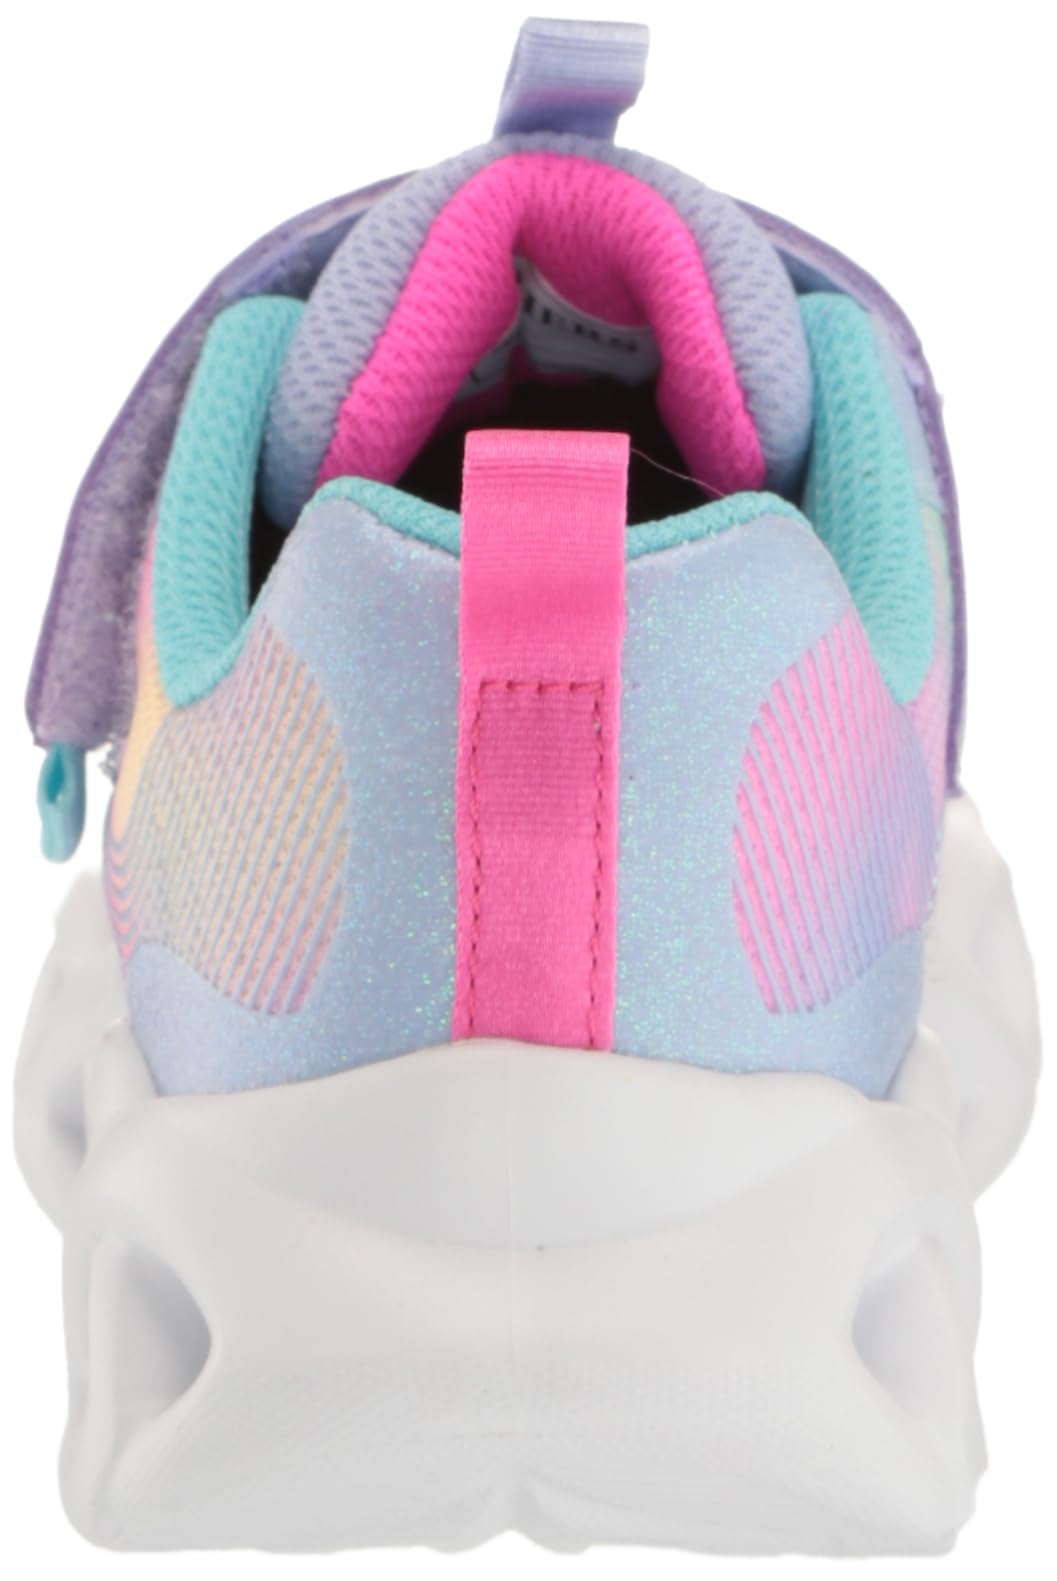 Skechers Unisex-Child Twisty Brights 2.0 Sneaker